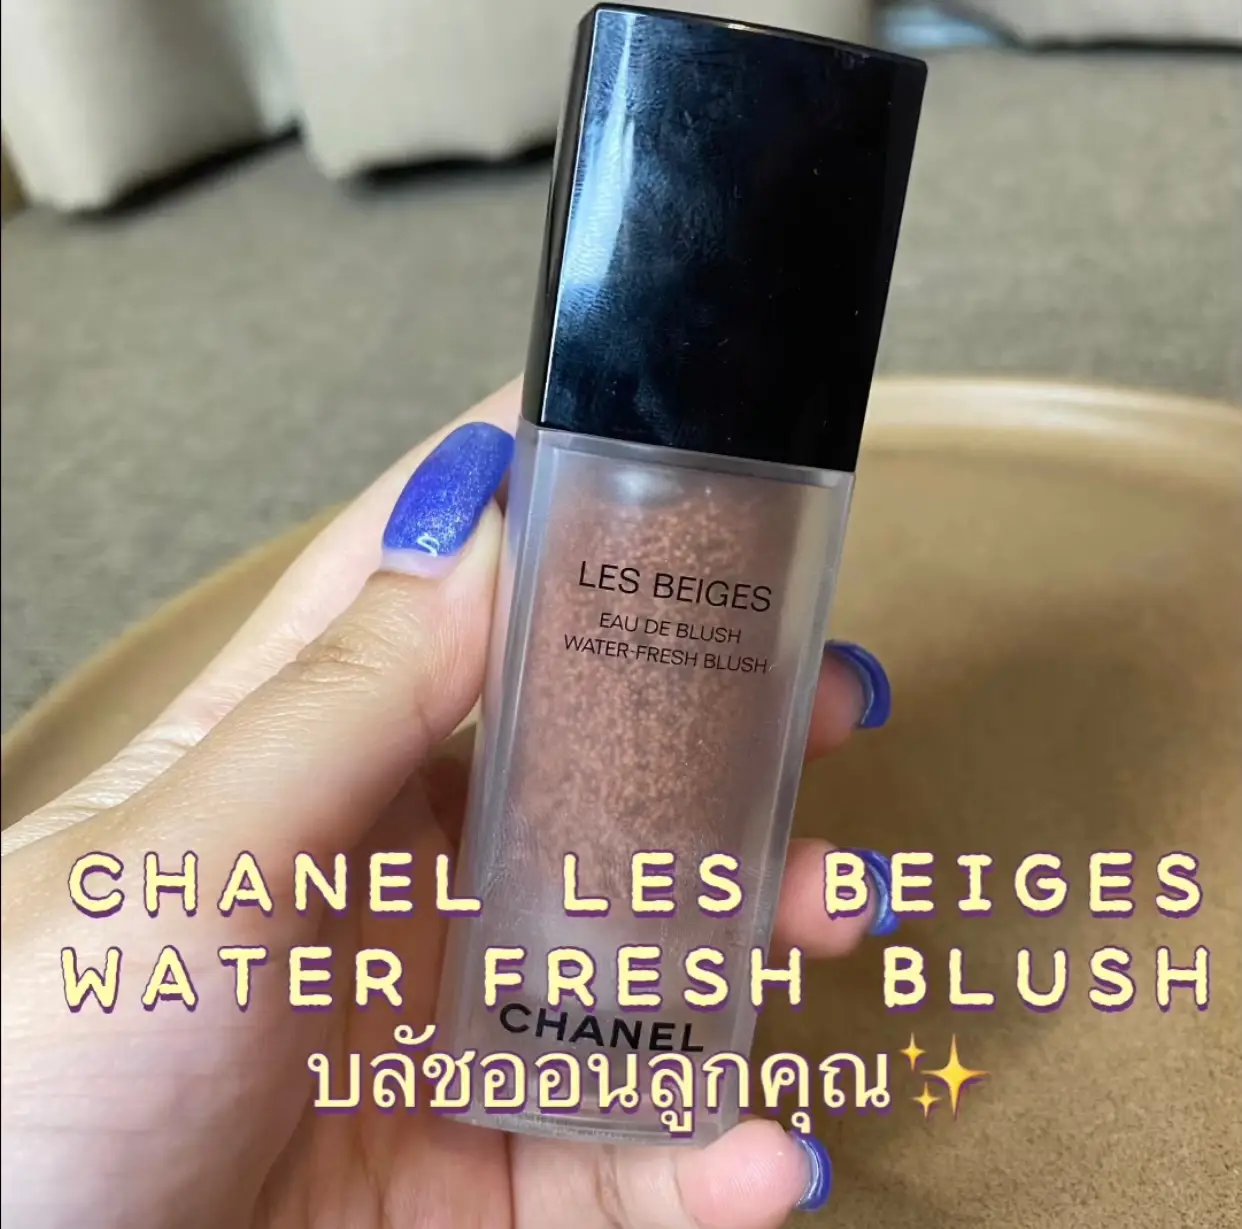 Chanel les beiges water fresh blush